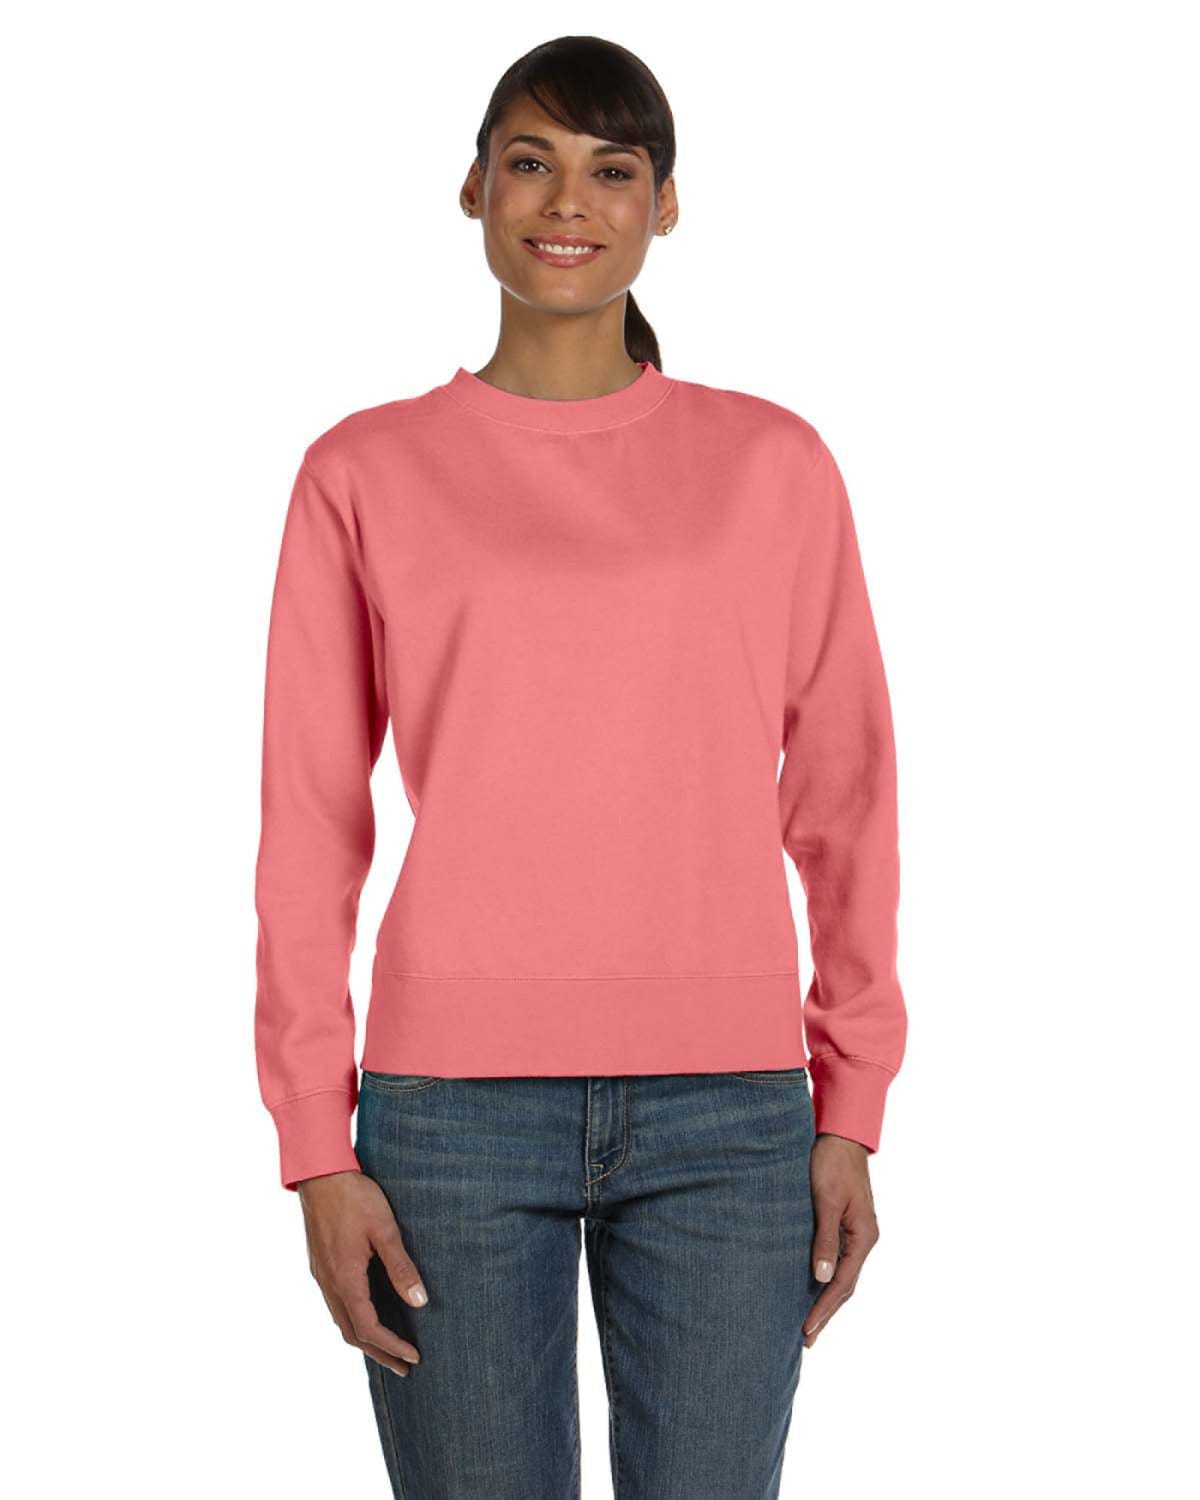 Dyegold Crewneck Sweatshirt Women Clearance Sale Ladies Loose Soft